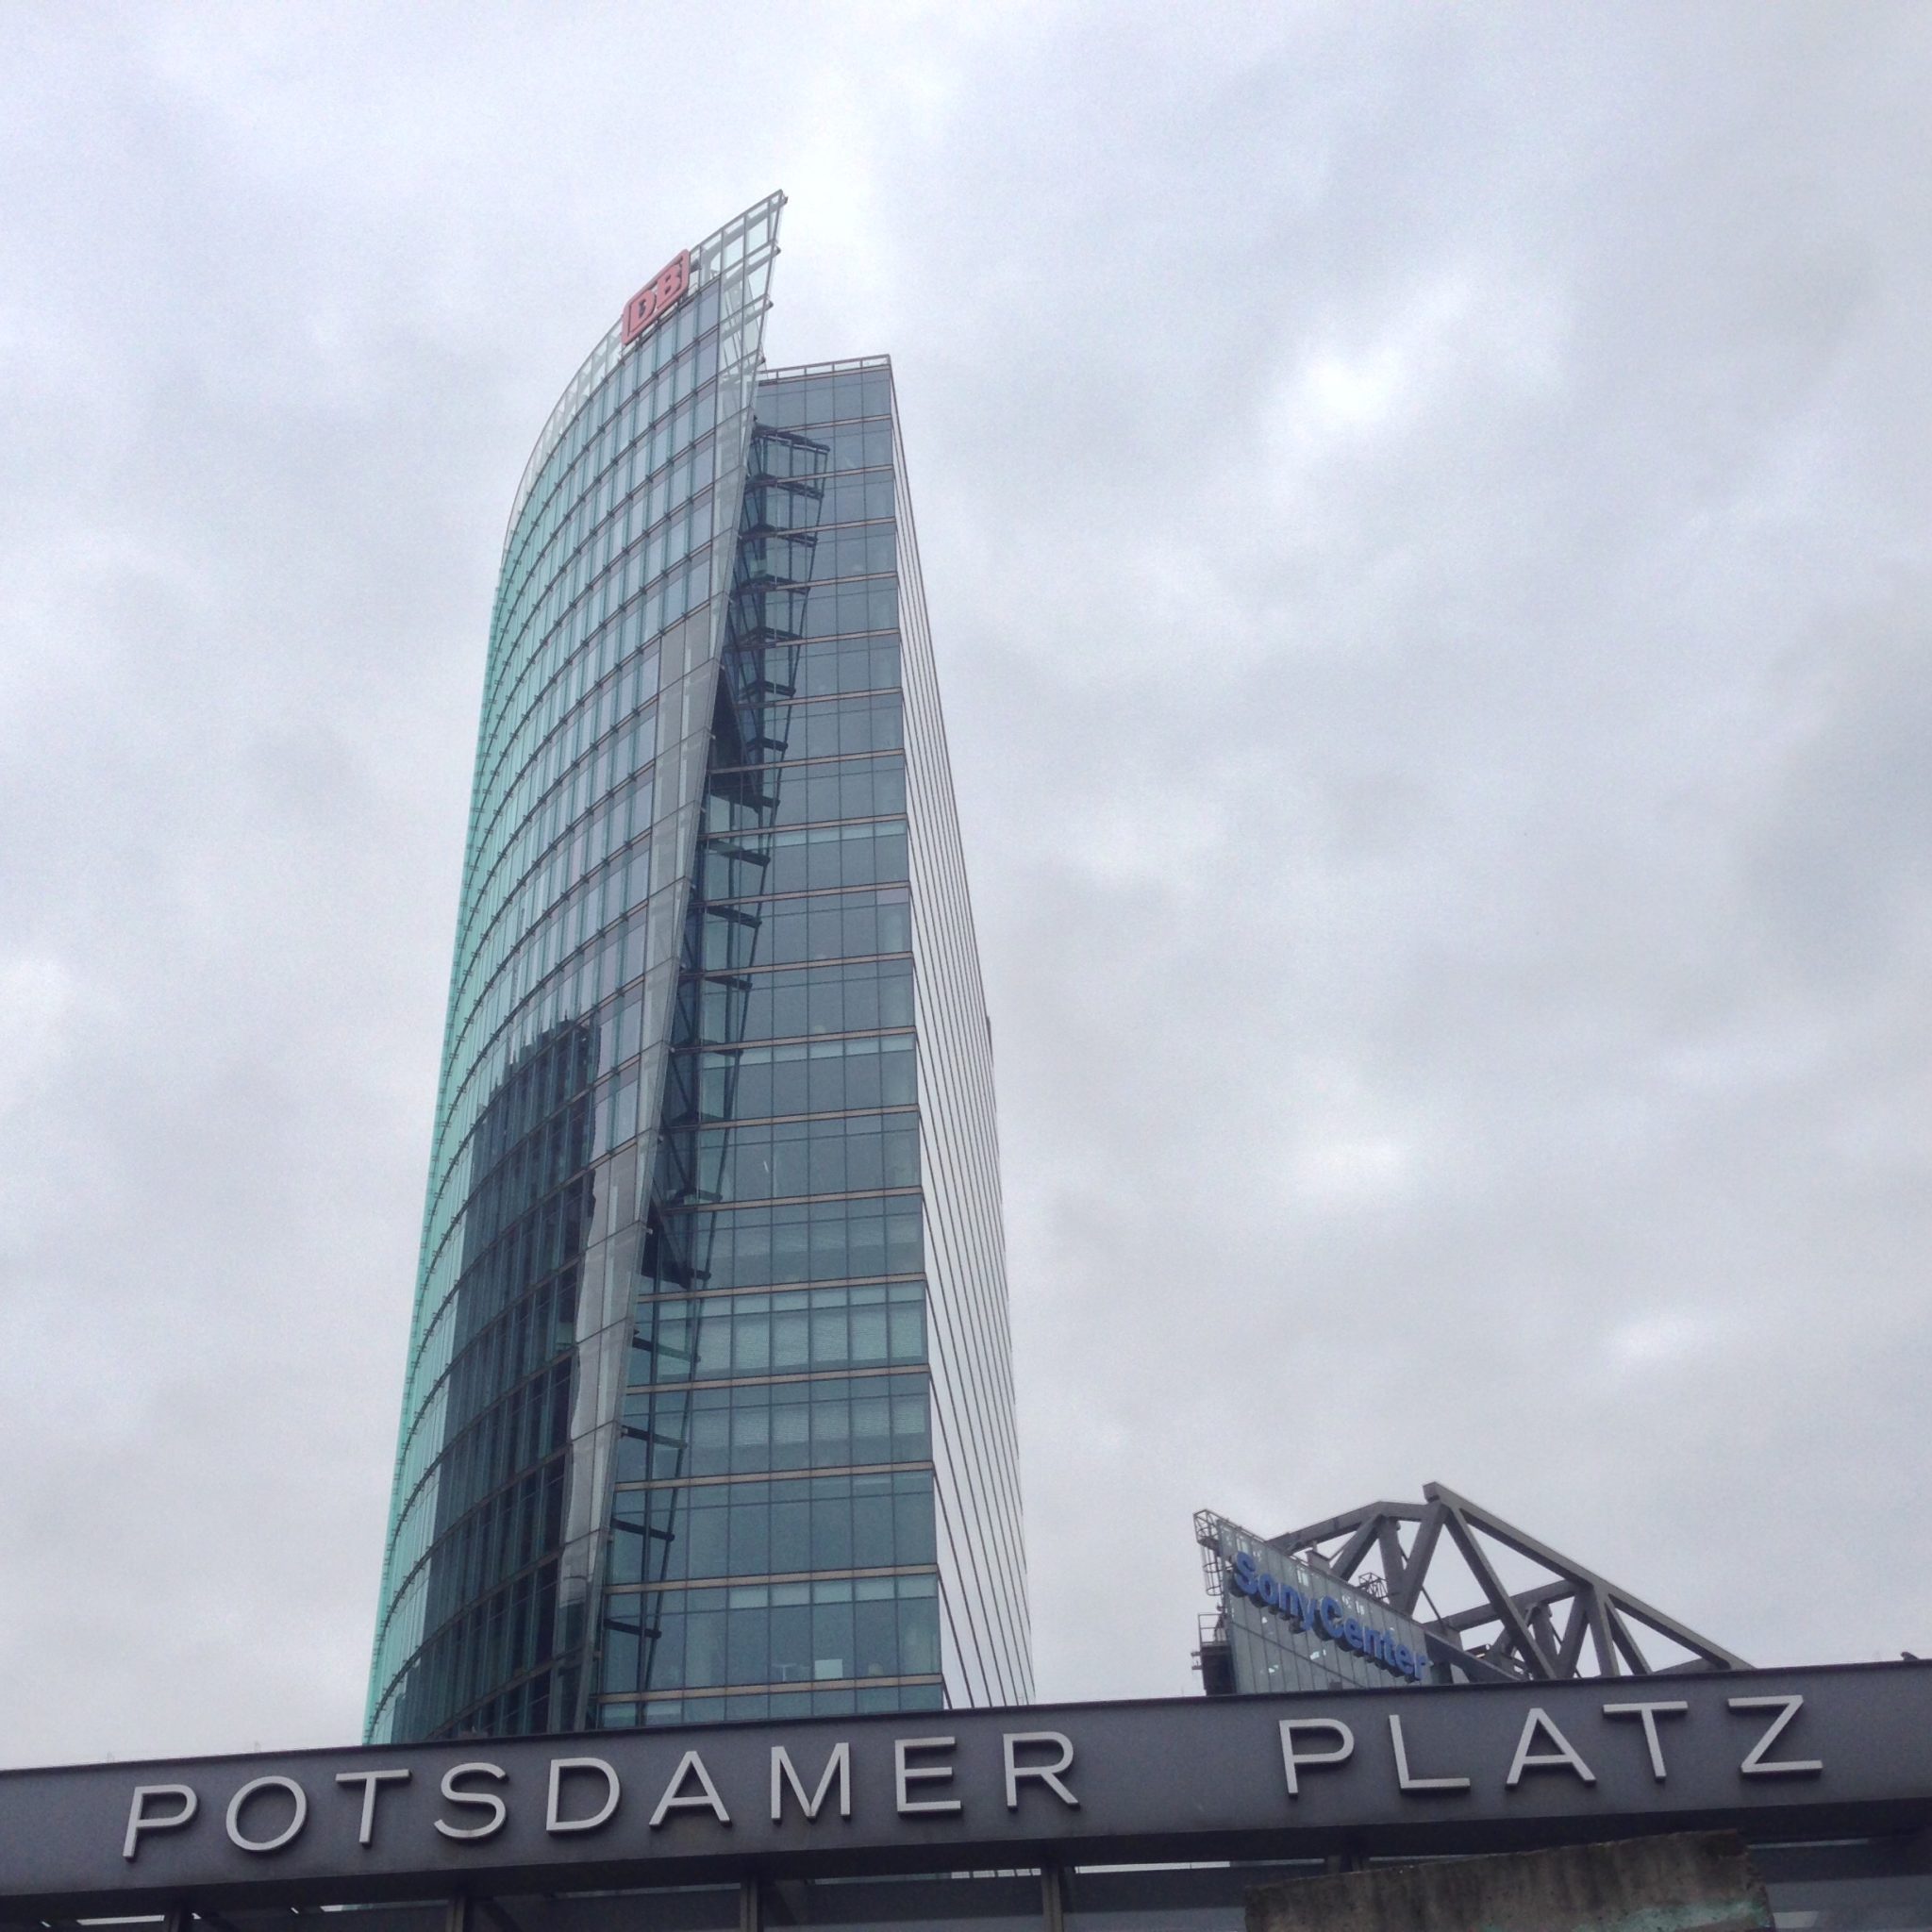 Potsdamer Platz, Berlin, Germany